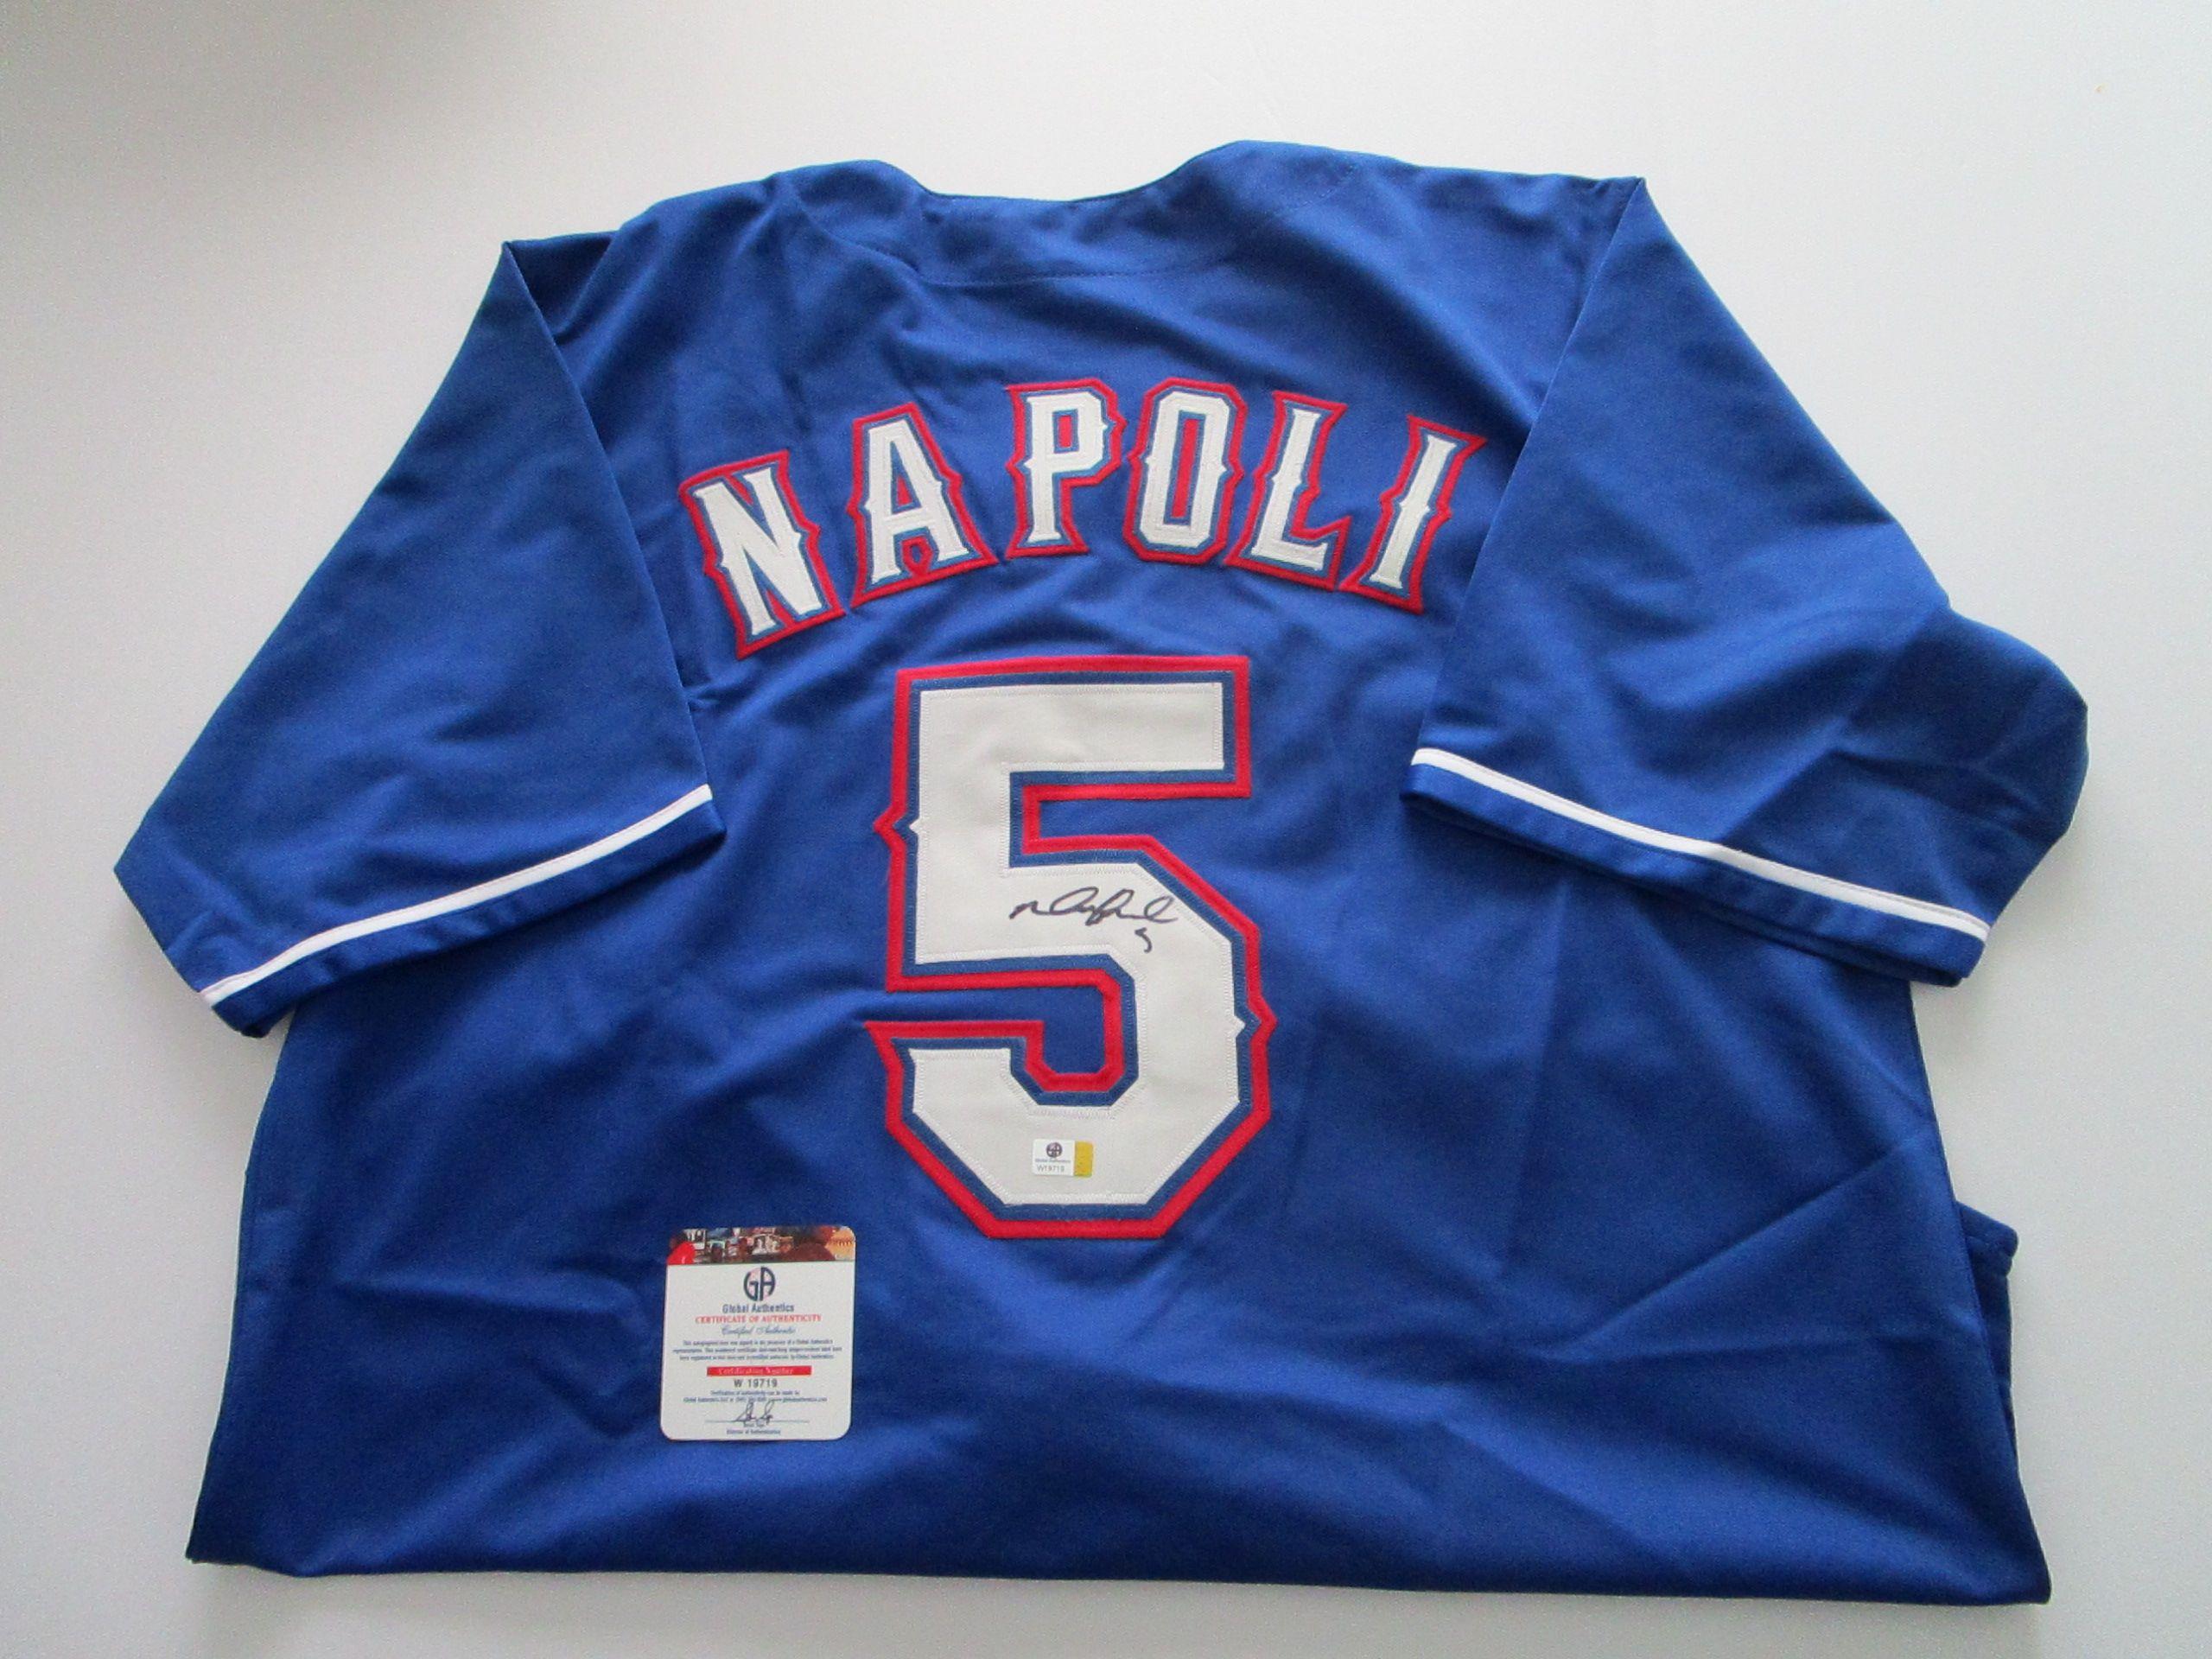 Mike Napoli, Texas Rangers Catcher, World Series Champion, Autographed Jersey w COA